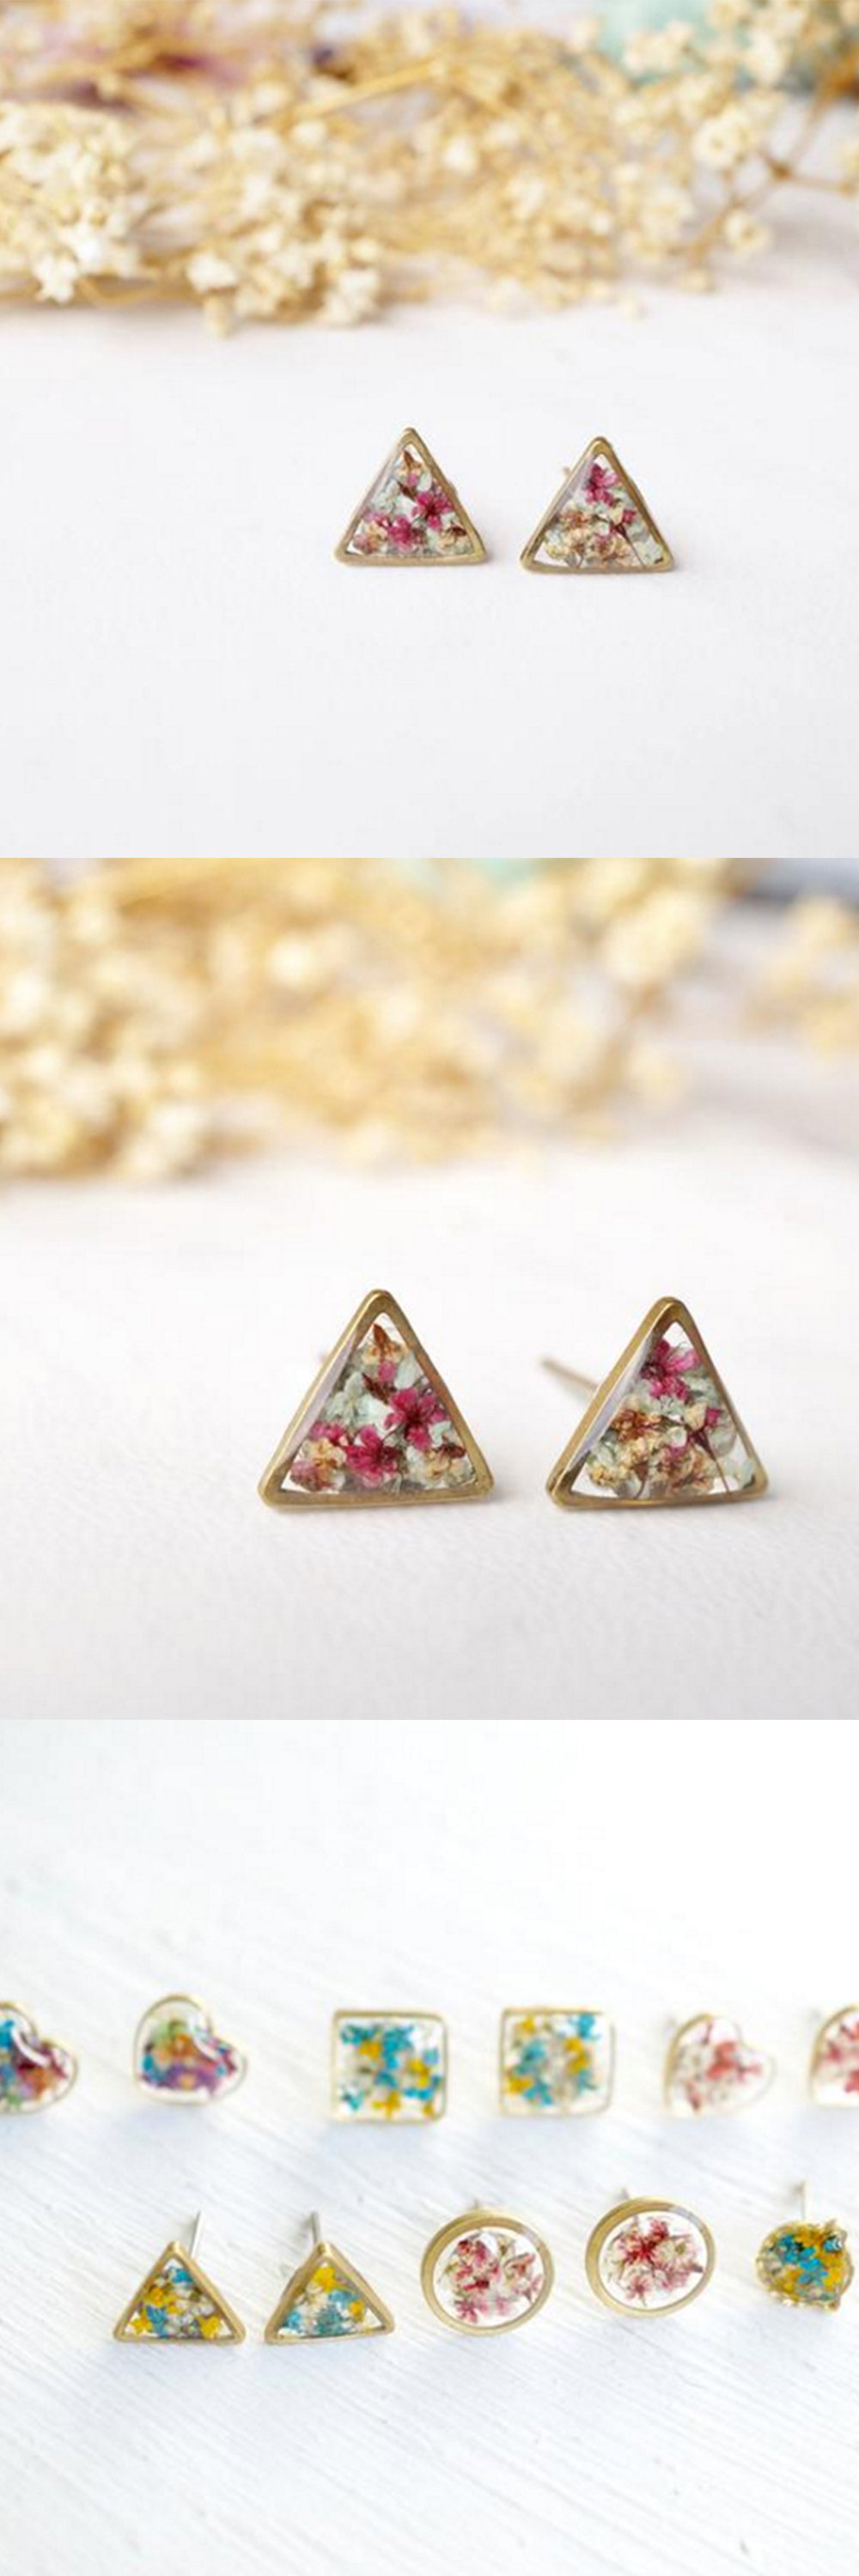 Pressed Flower Triangle Earrings - ApolloBox